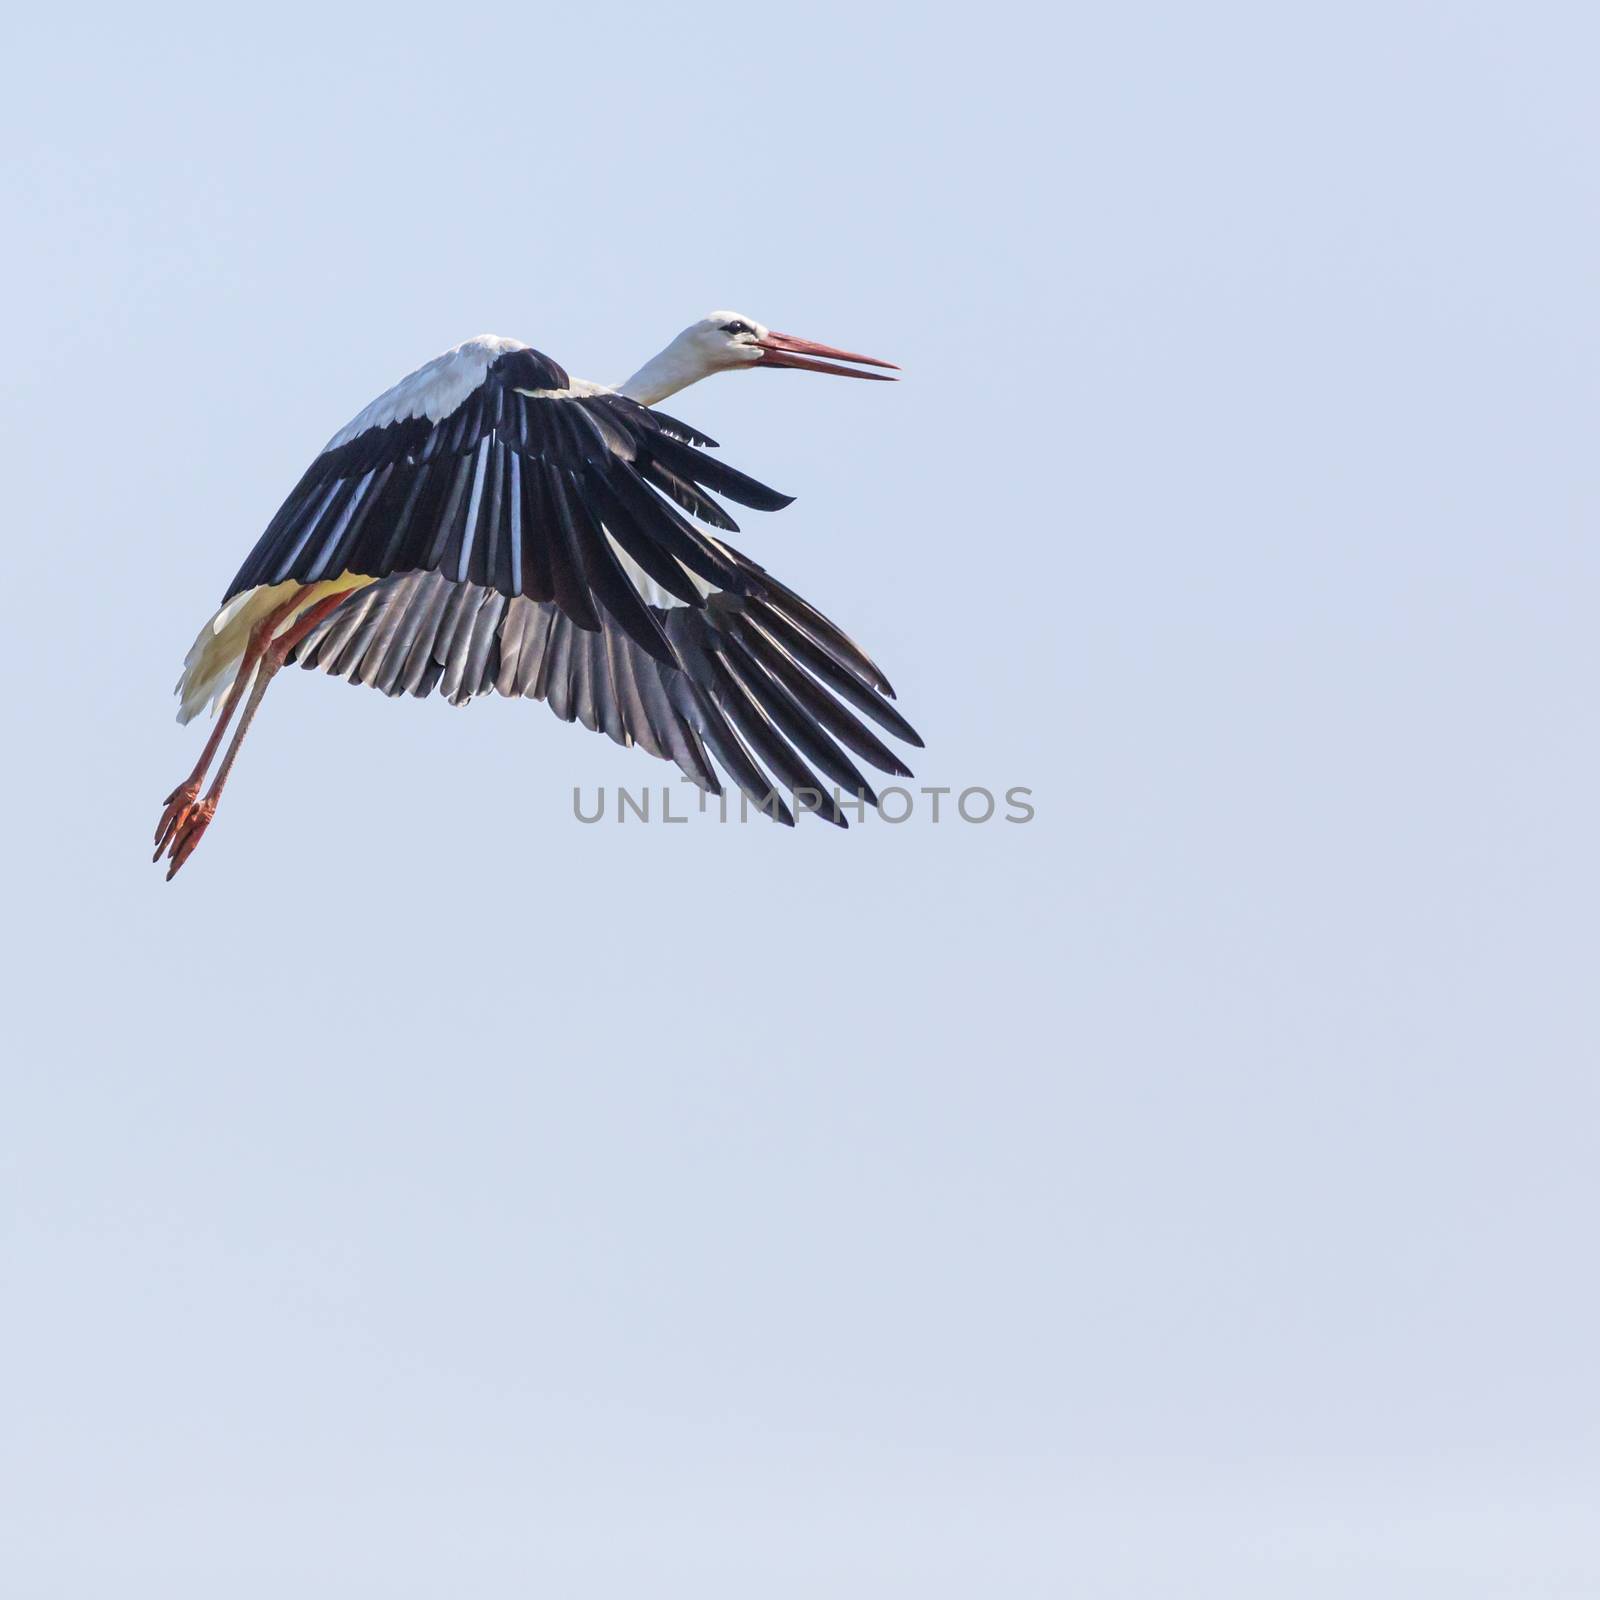 A Stork in flight in Suwalki Landscape Park, Poland.

